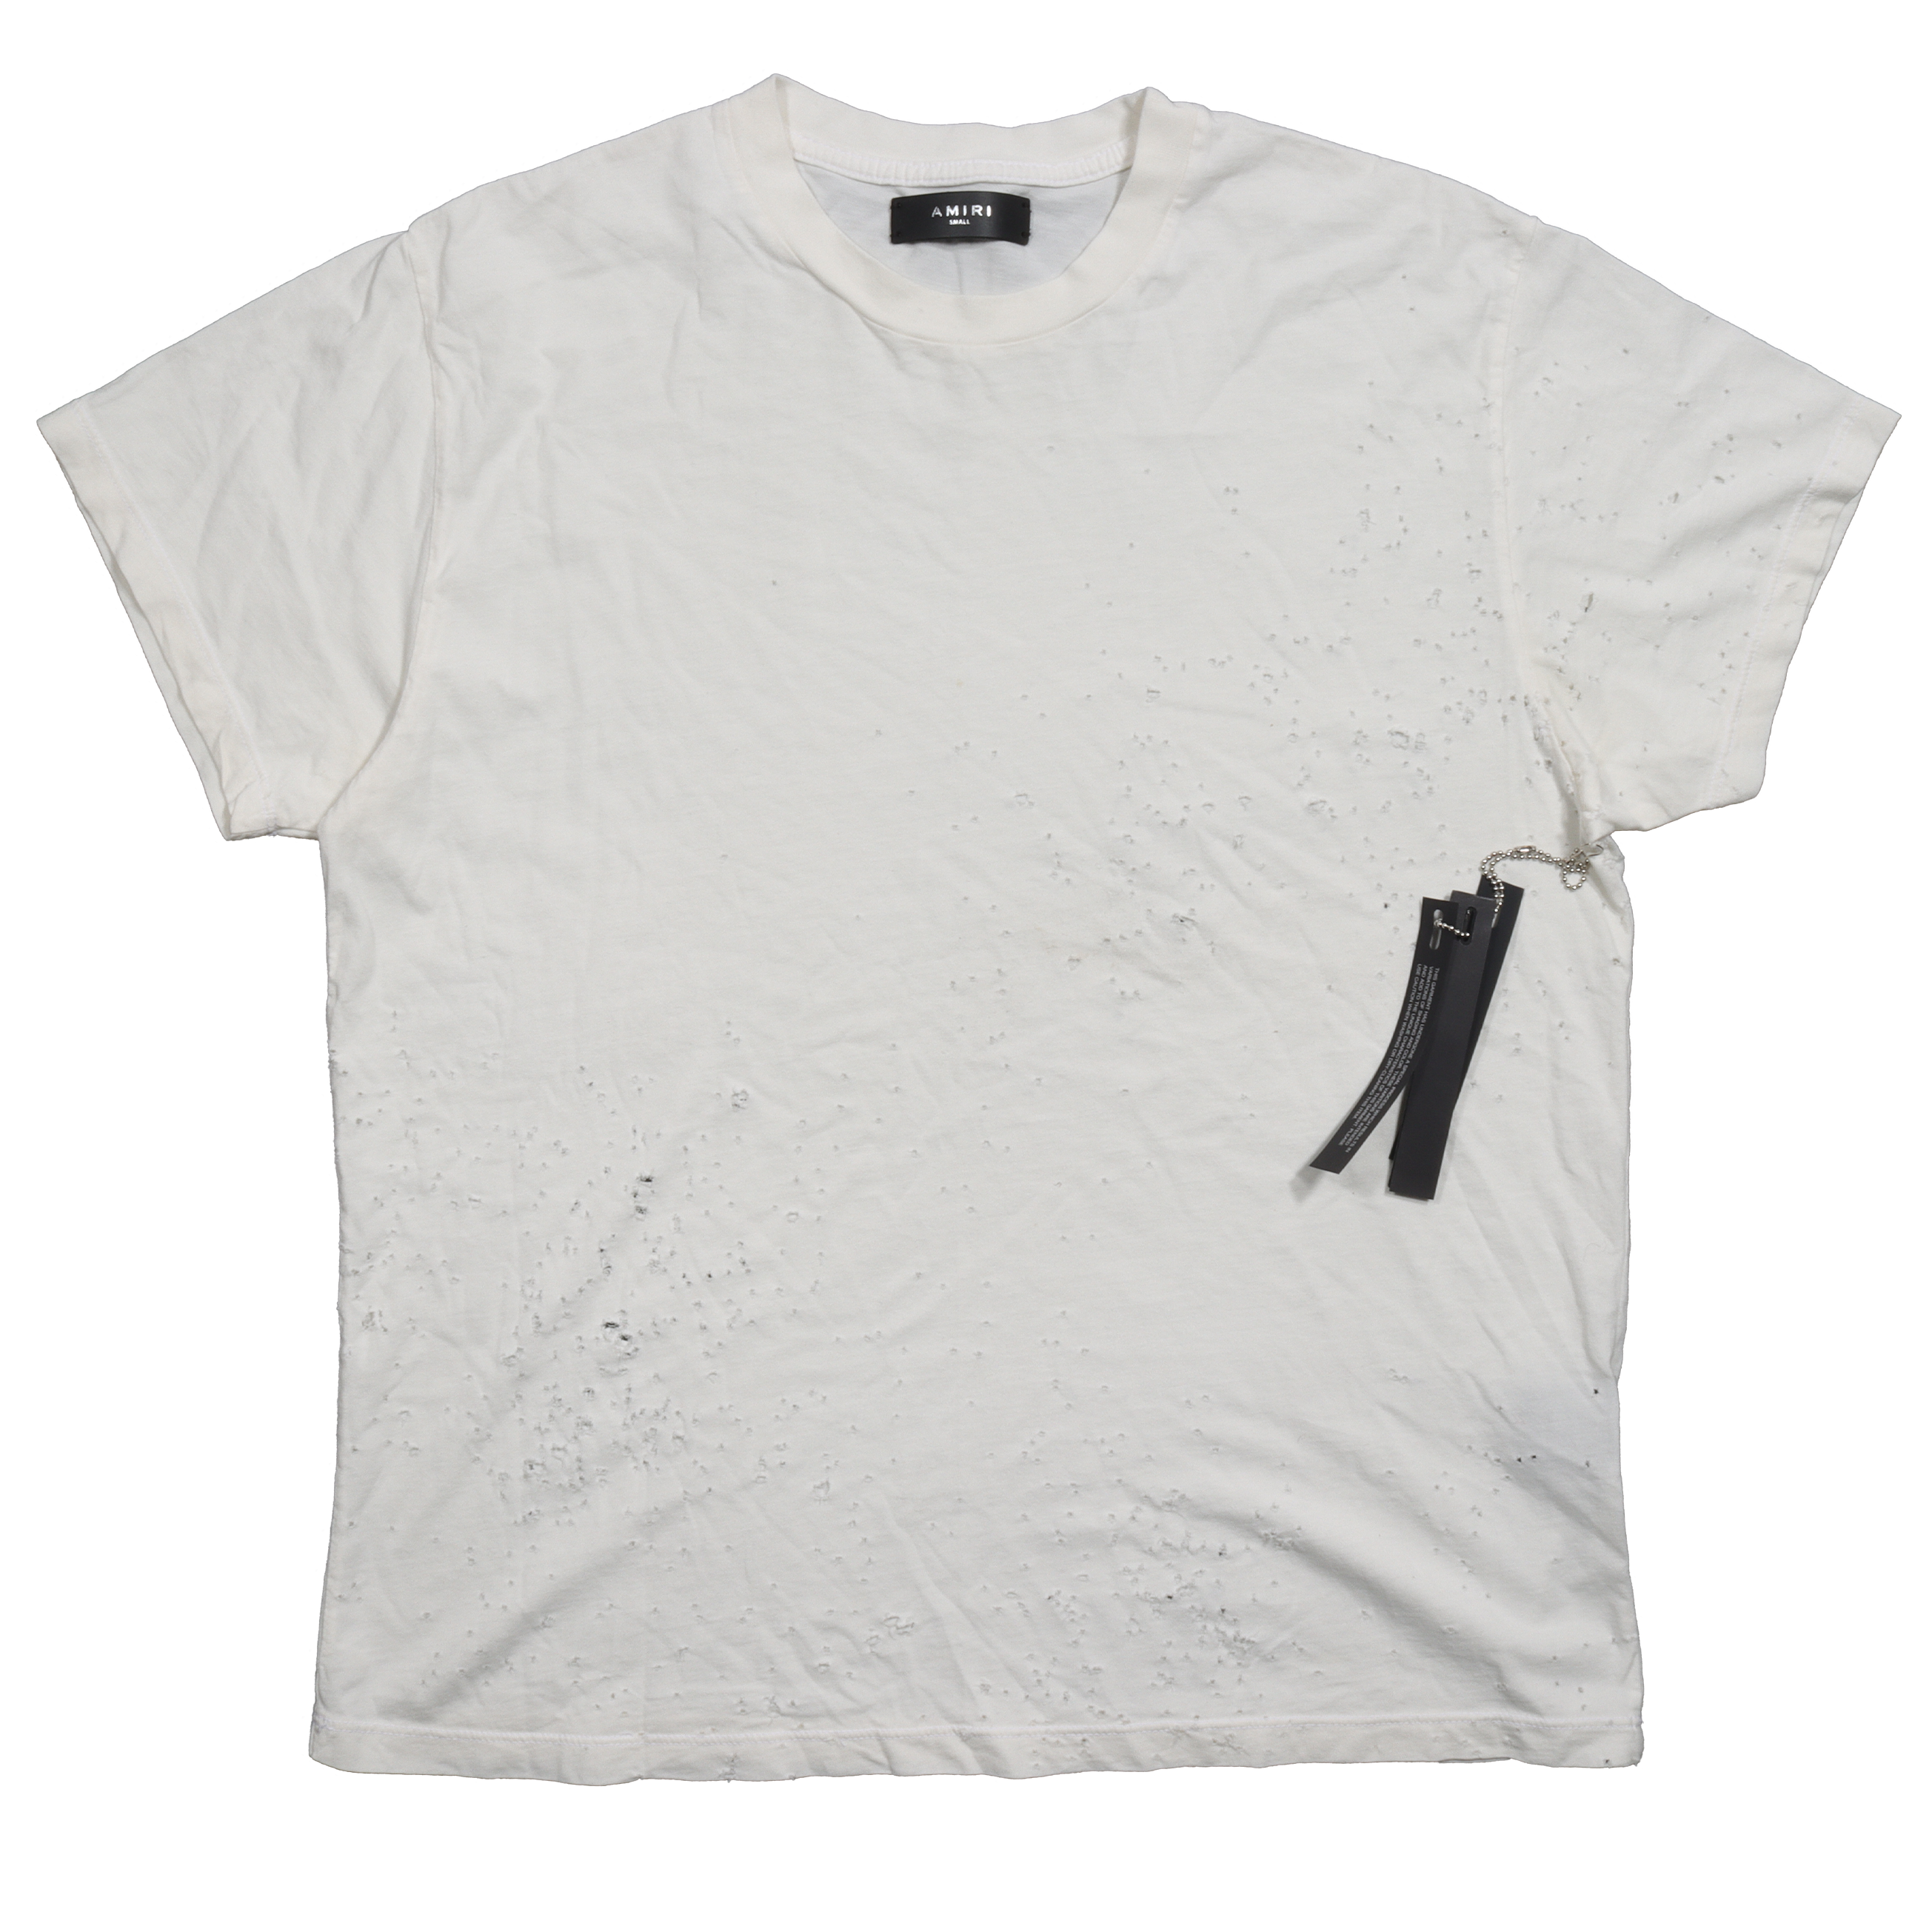 Shotgun Distressed T-Shirt w/ Tags